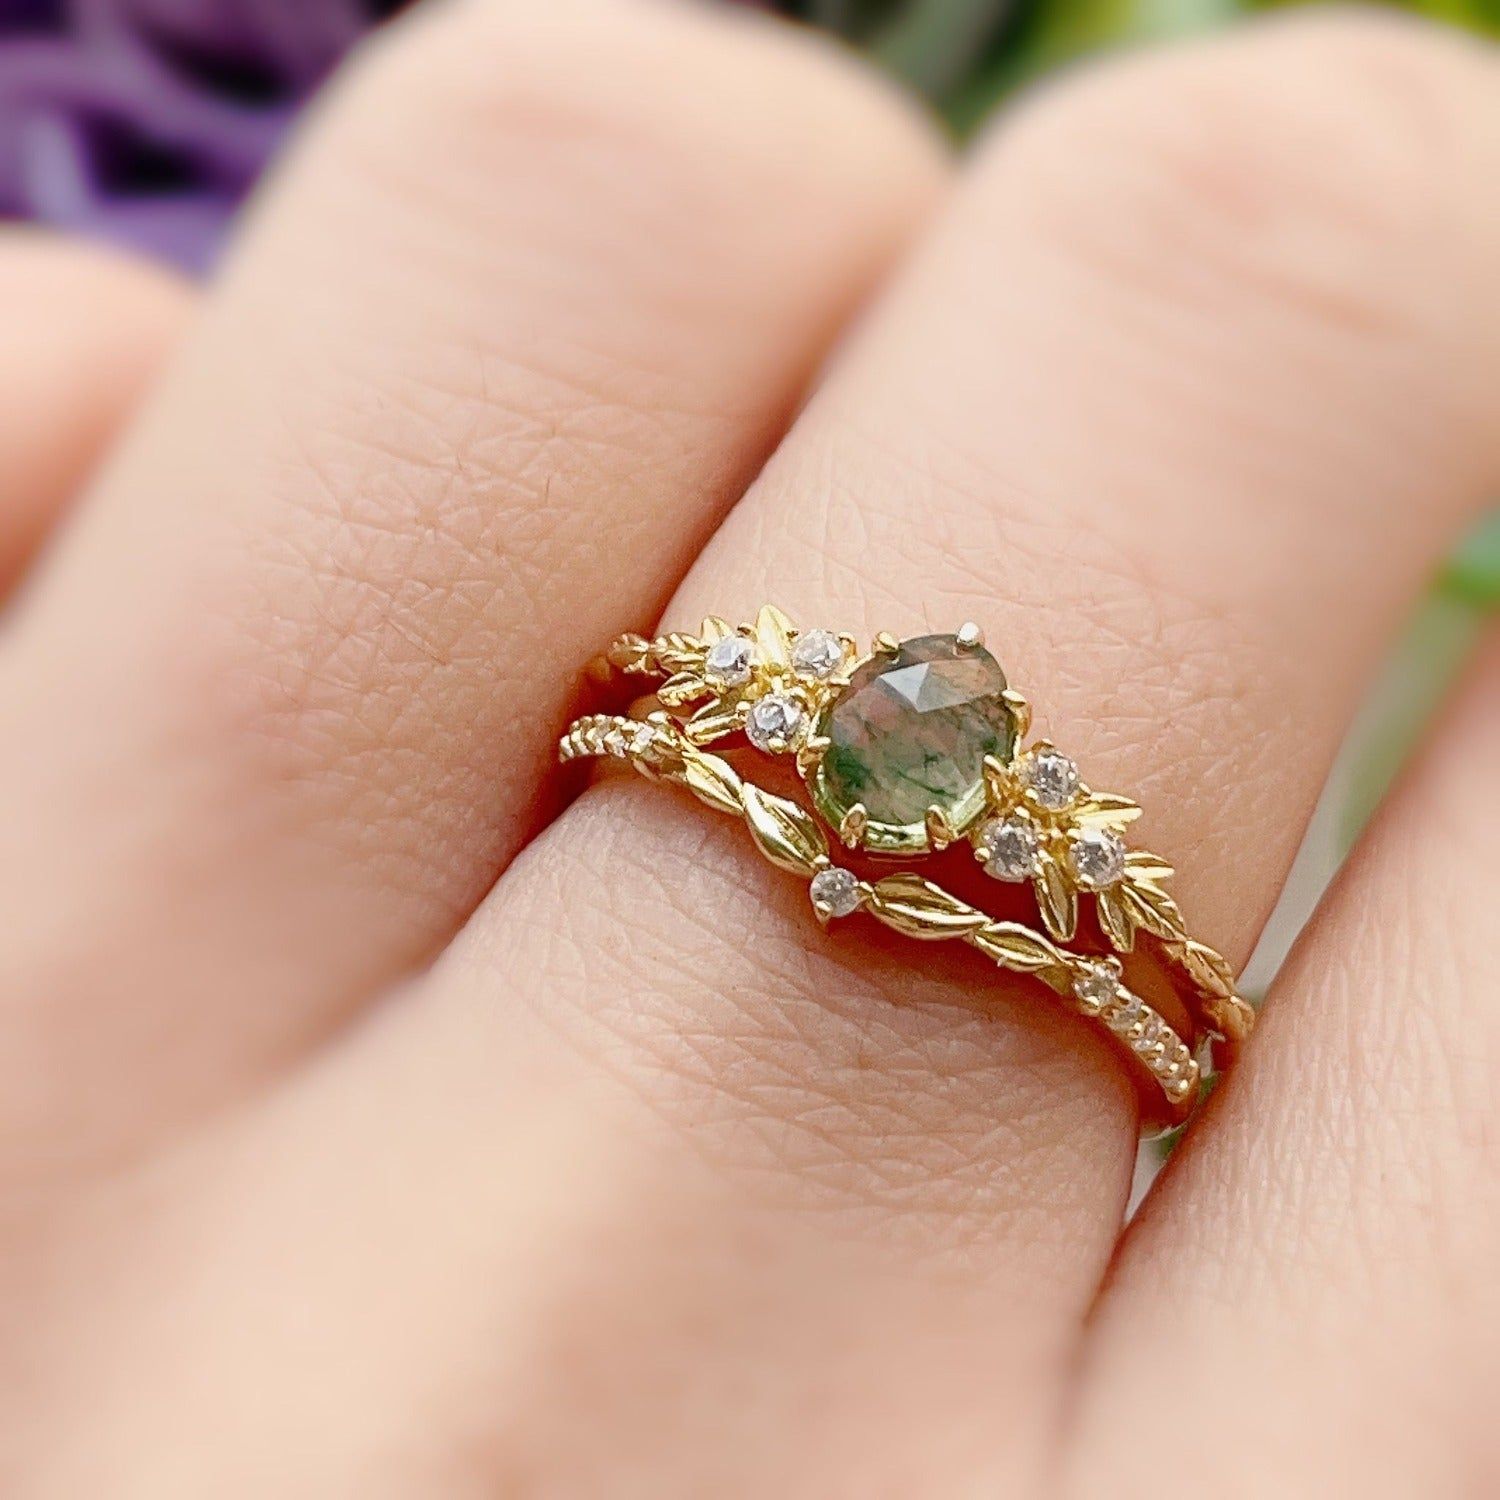 Choose the most unique design for engagement rings